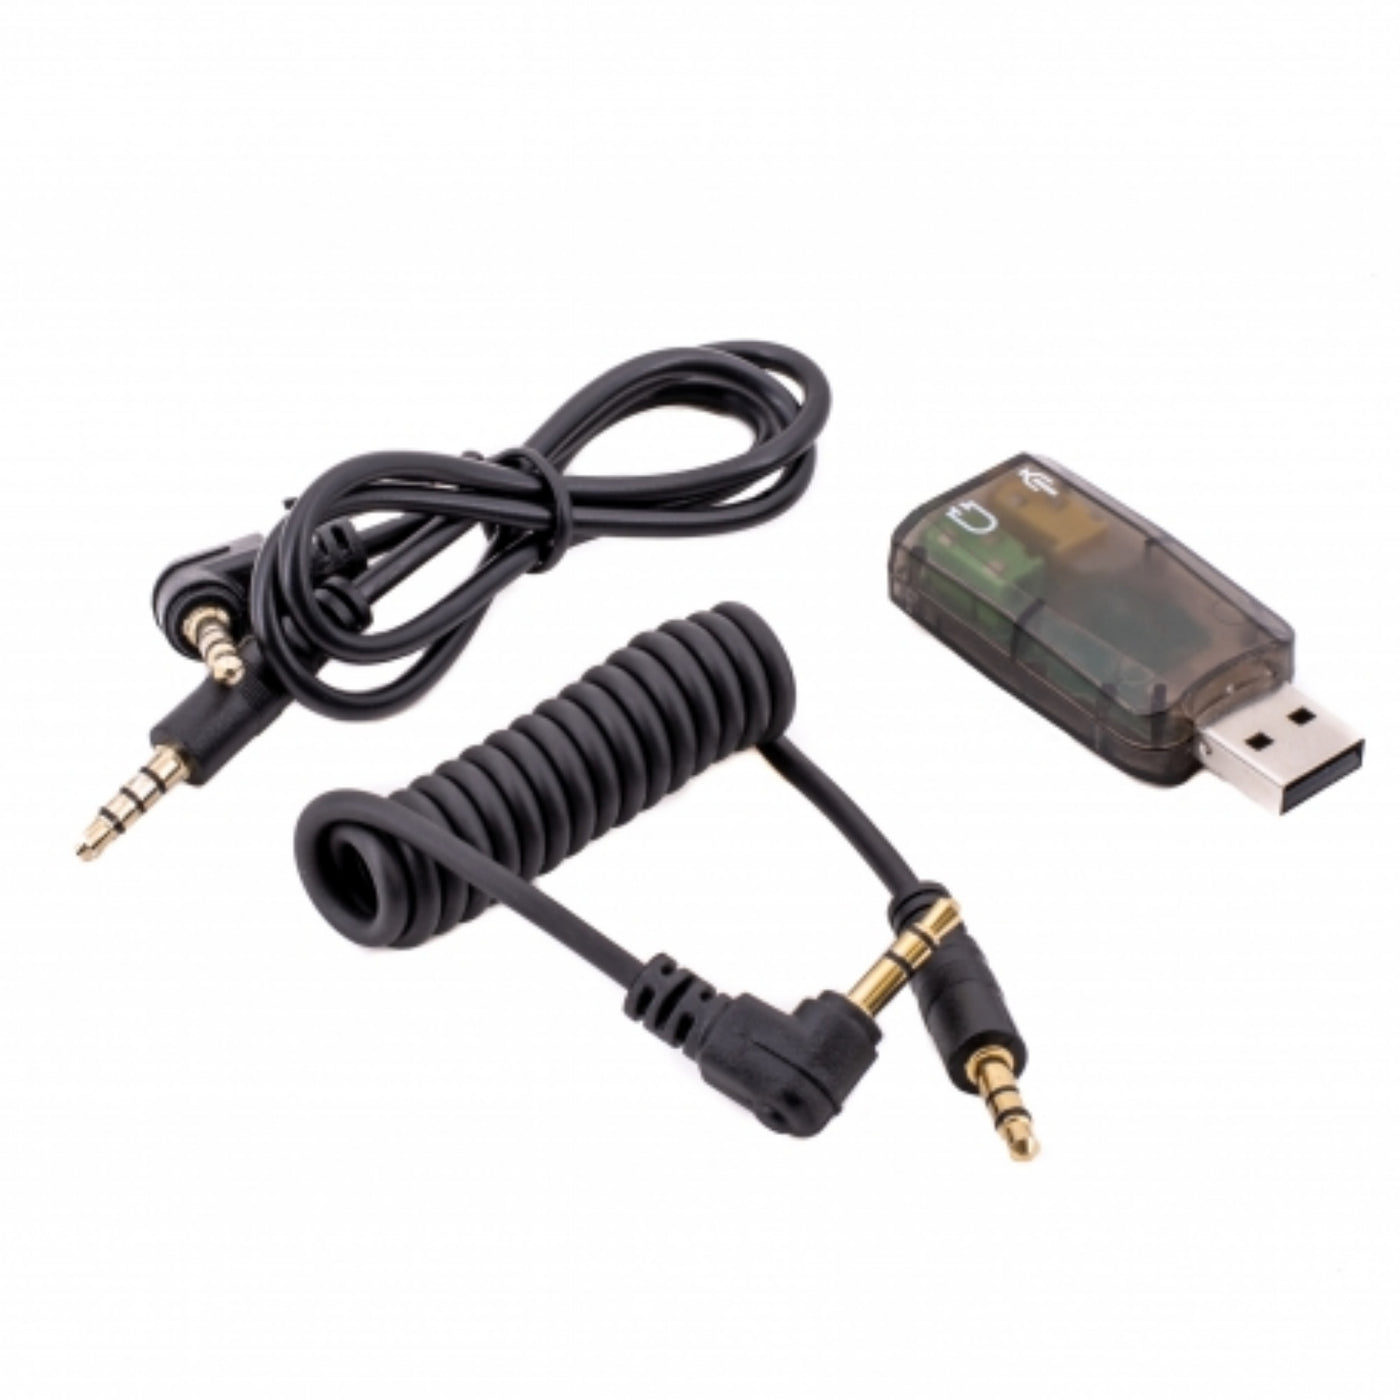 CAD Audio PM3100 PodMaster Run-n-Gun Professional Podcast/Streaming Microphone (PM3100)